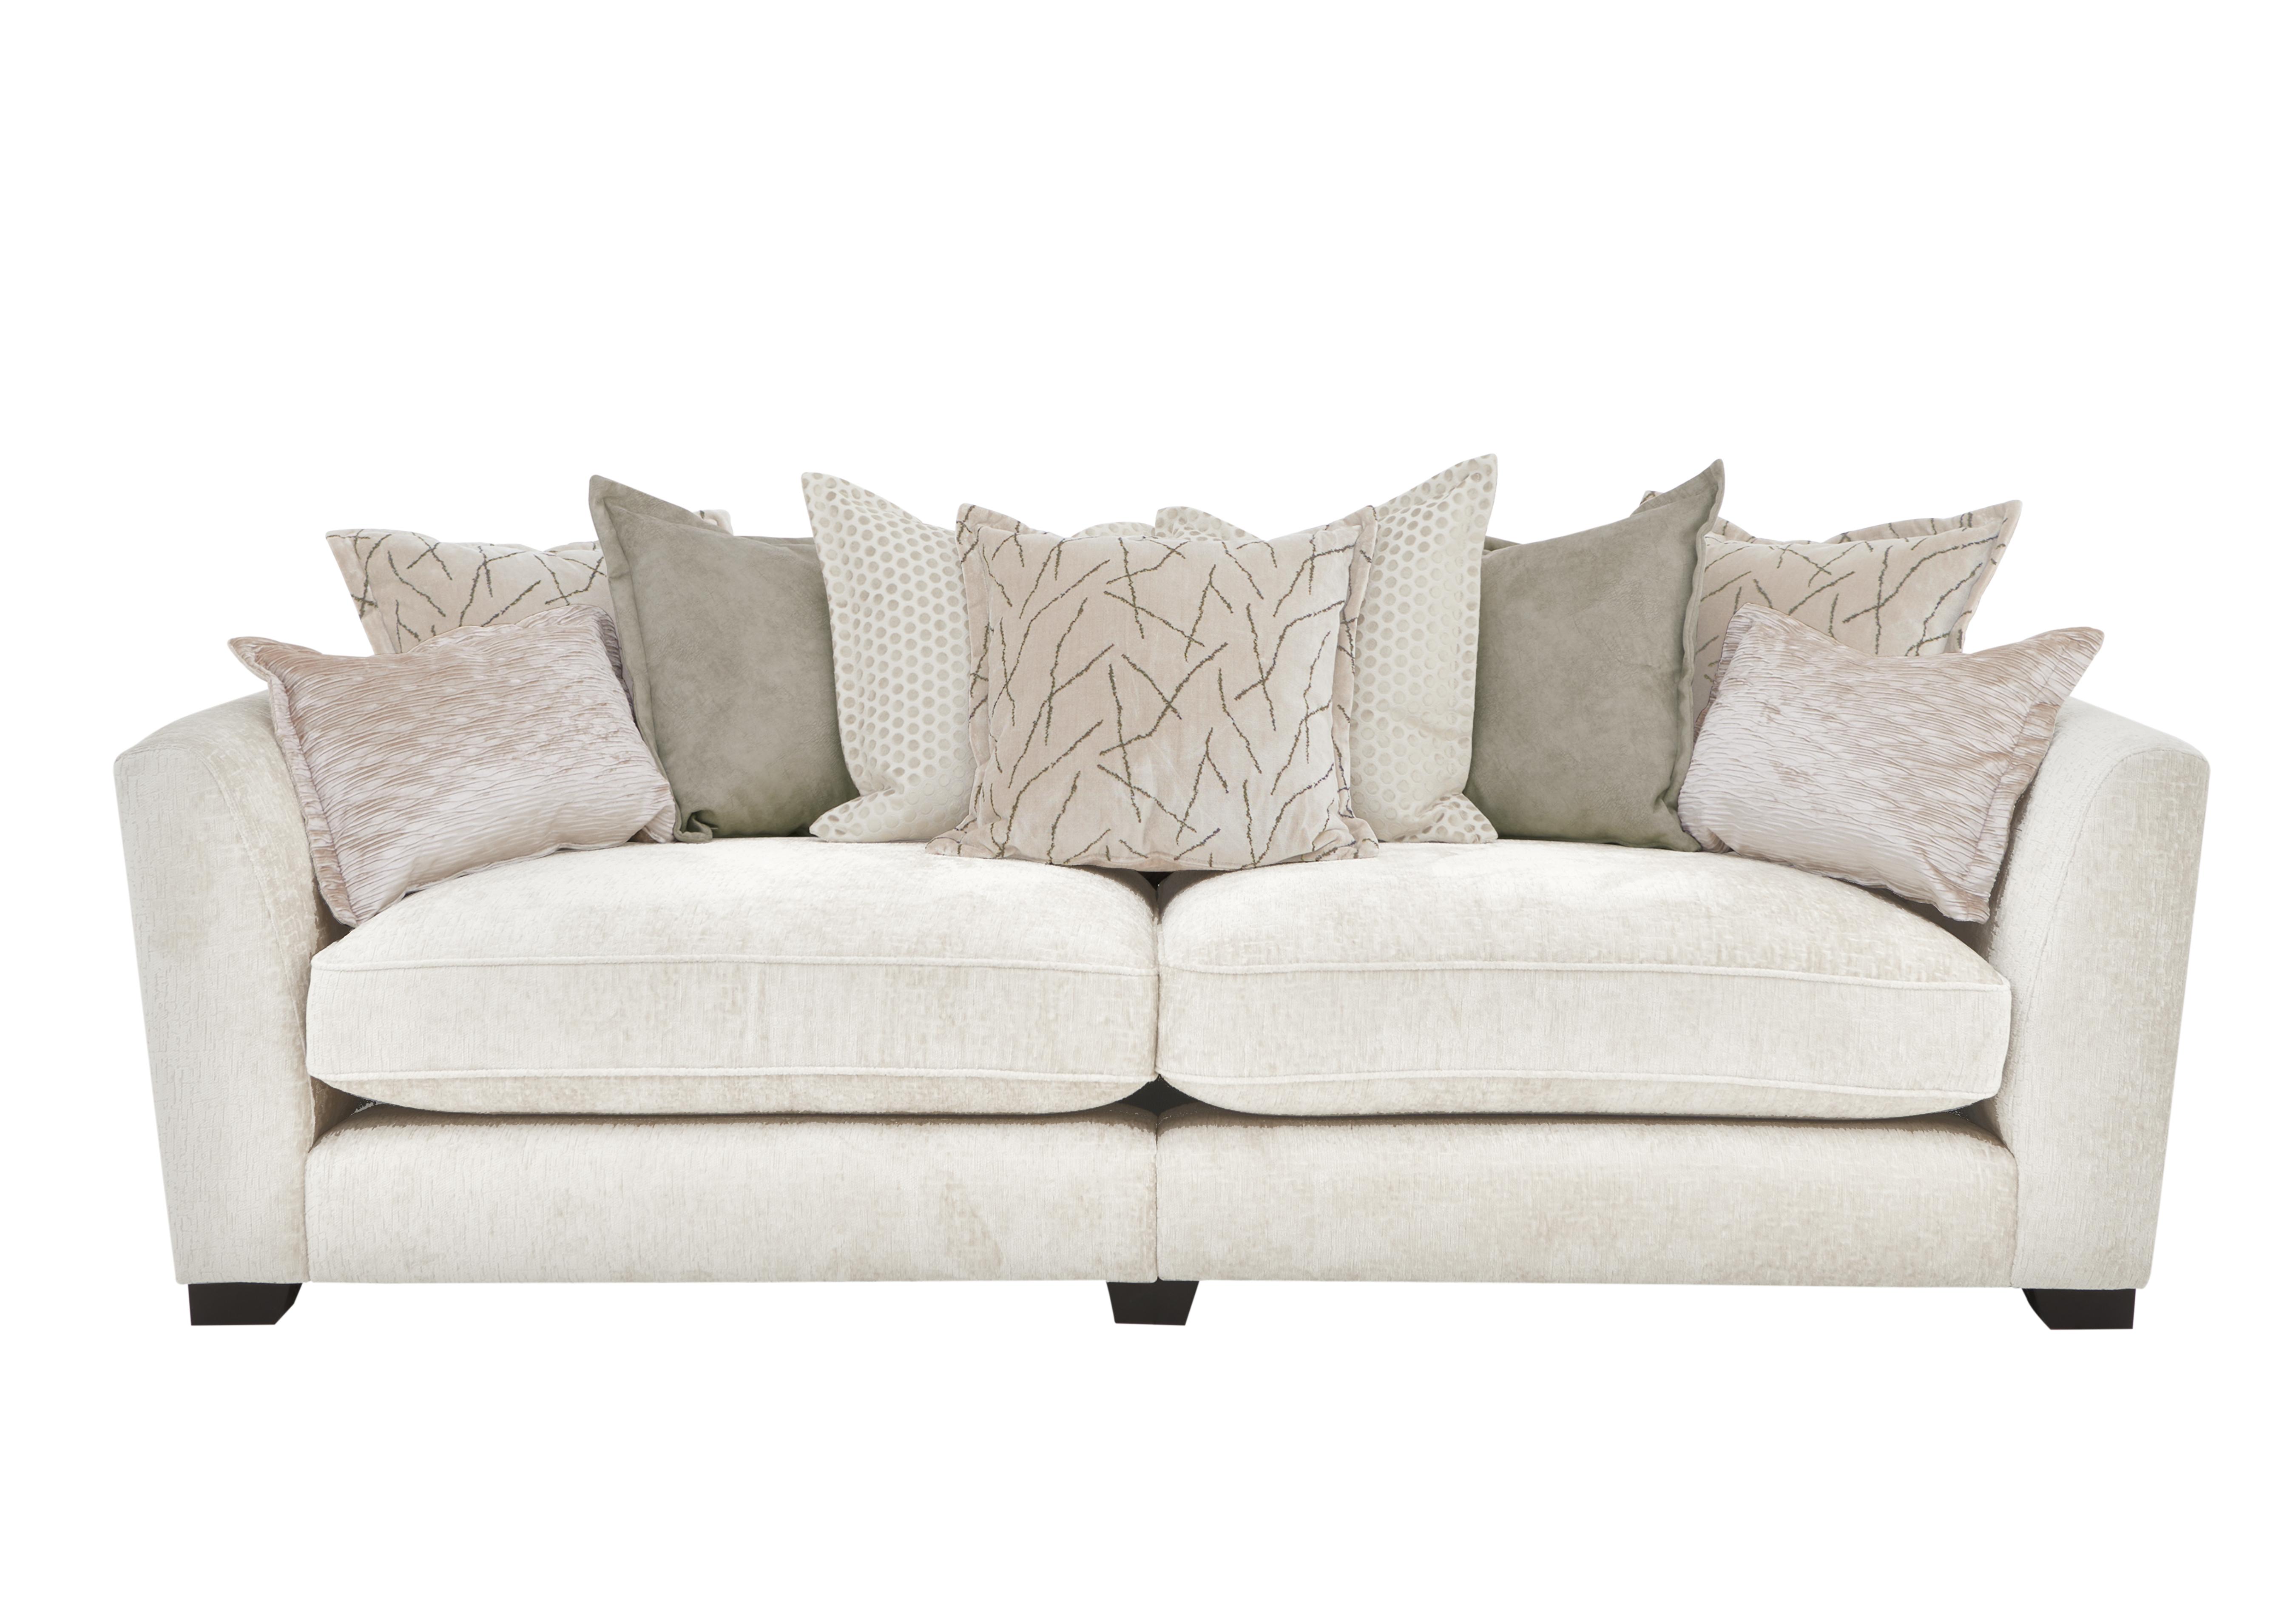 Boutique Lavish Fabric 4 Seater Split Scatter Back Sofa in Alexandra Ecru on Furniture Village